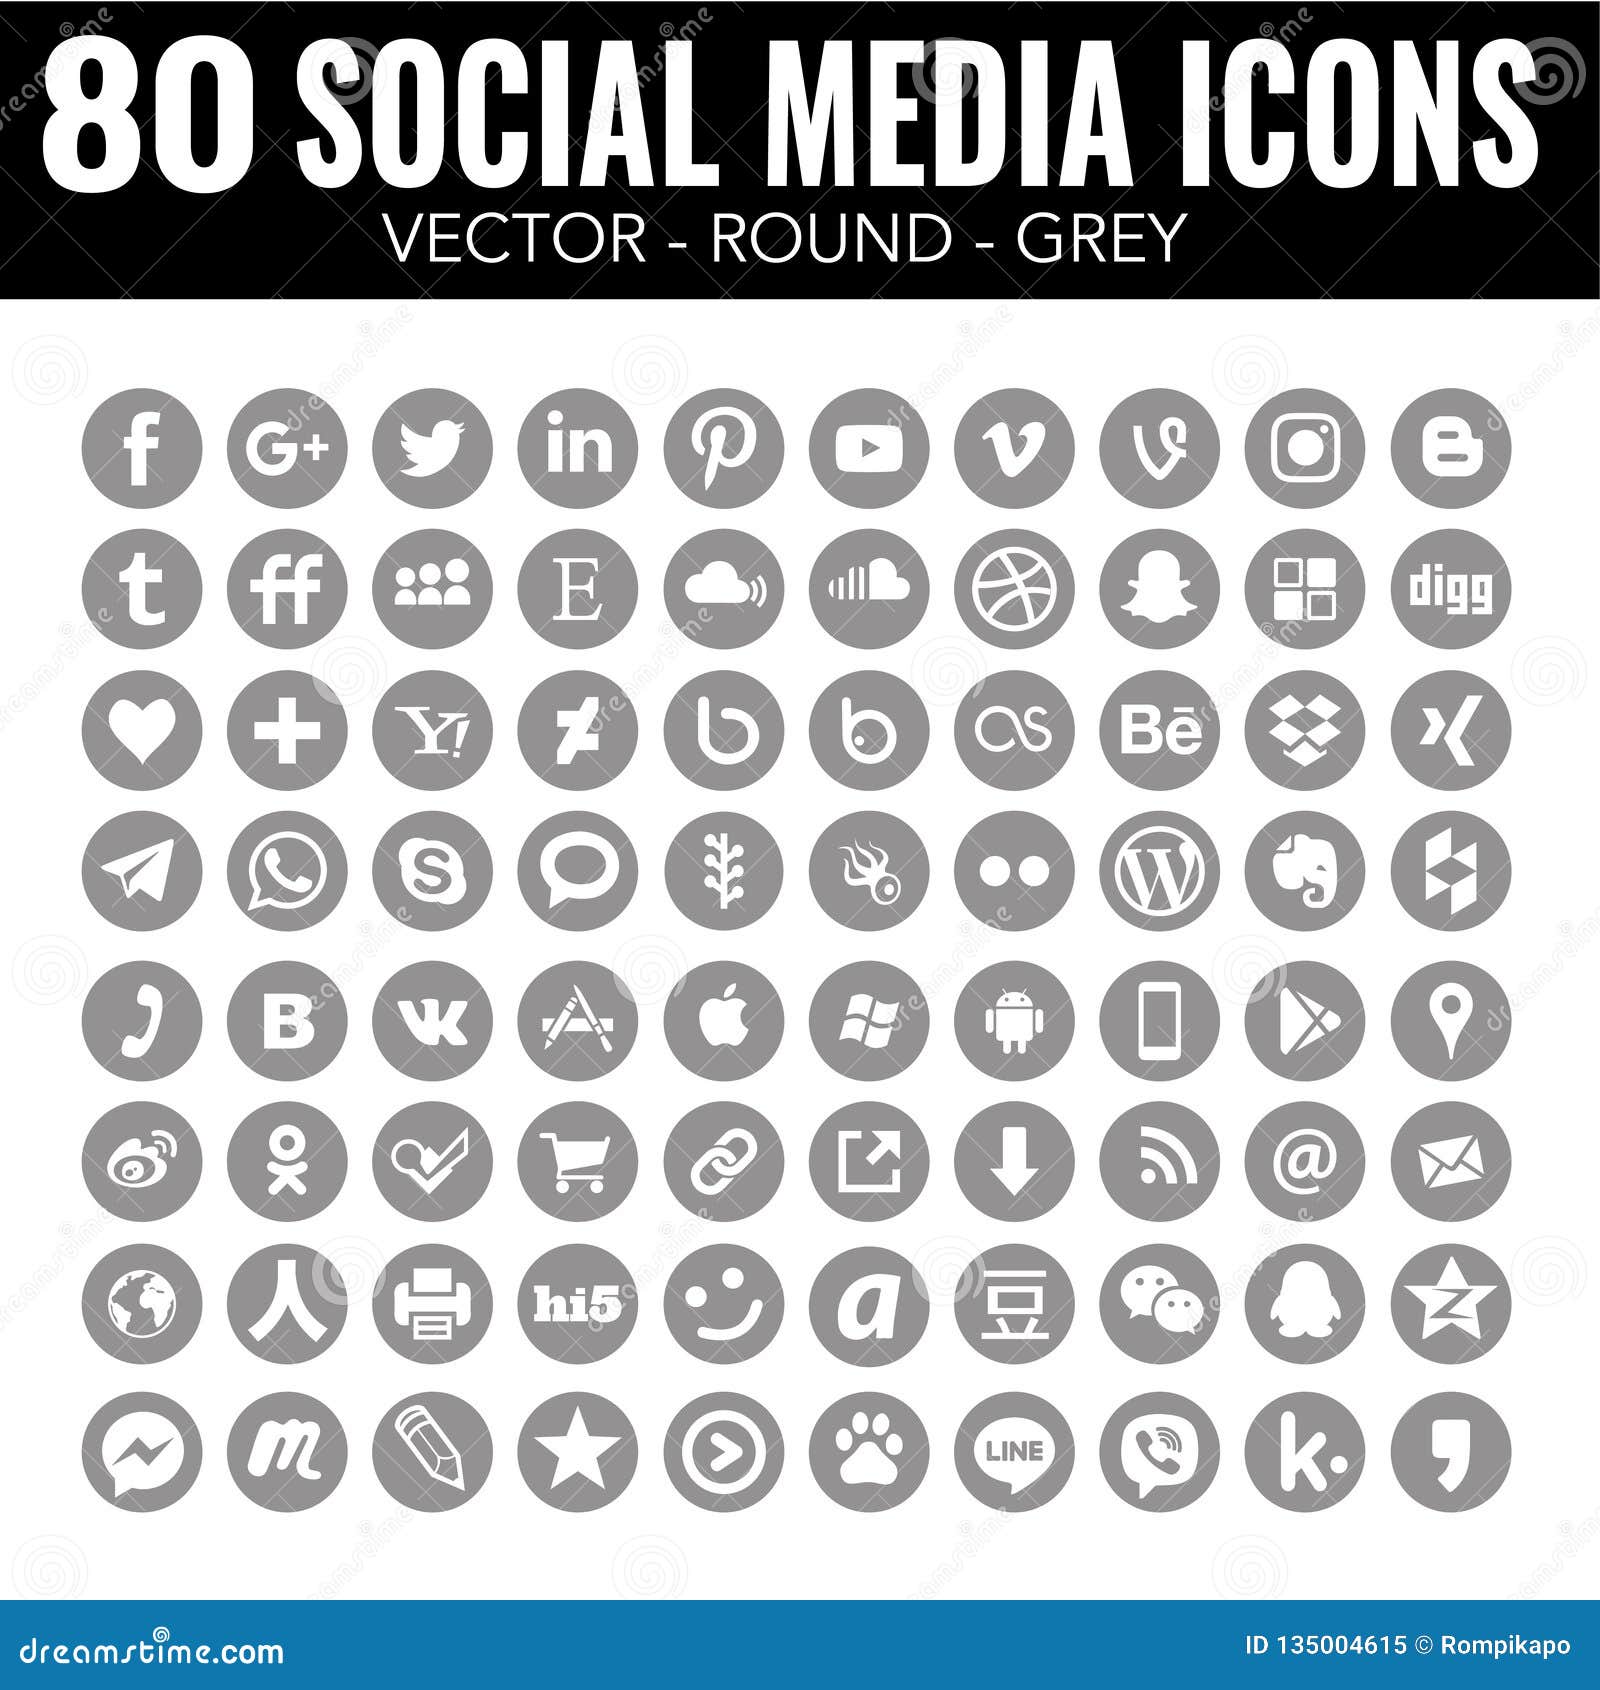 Grey round Social Media Icons